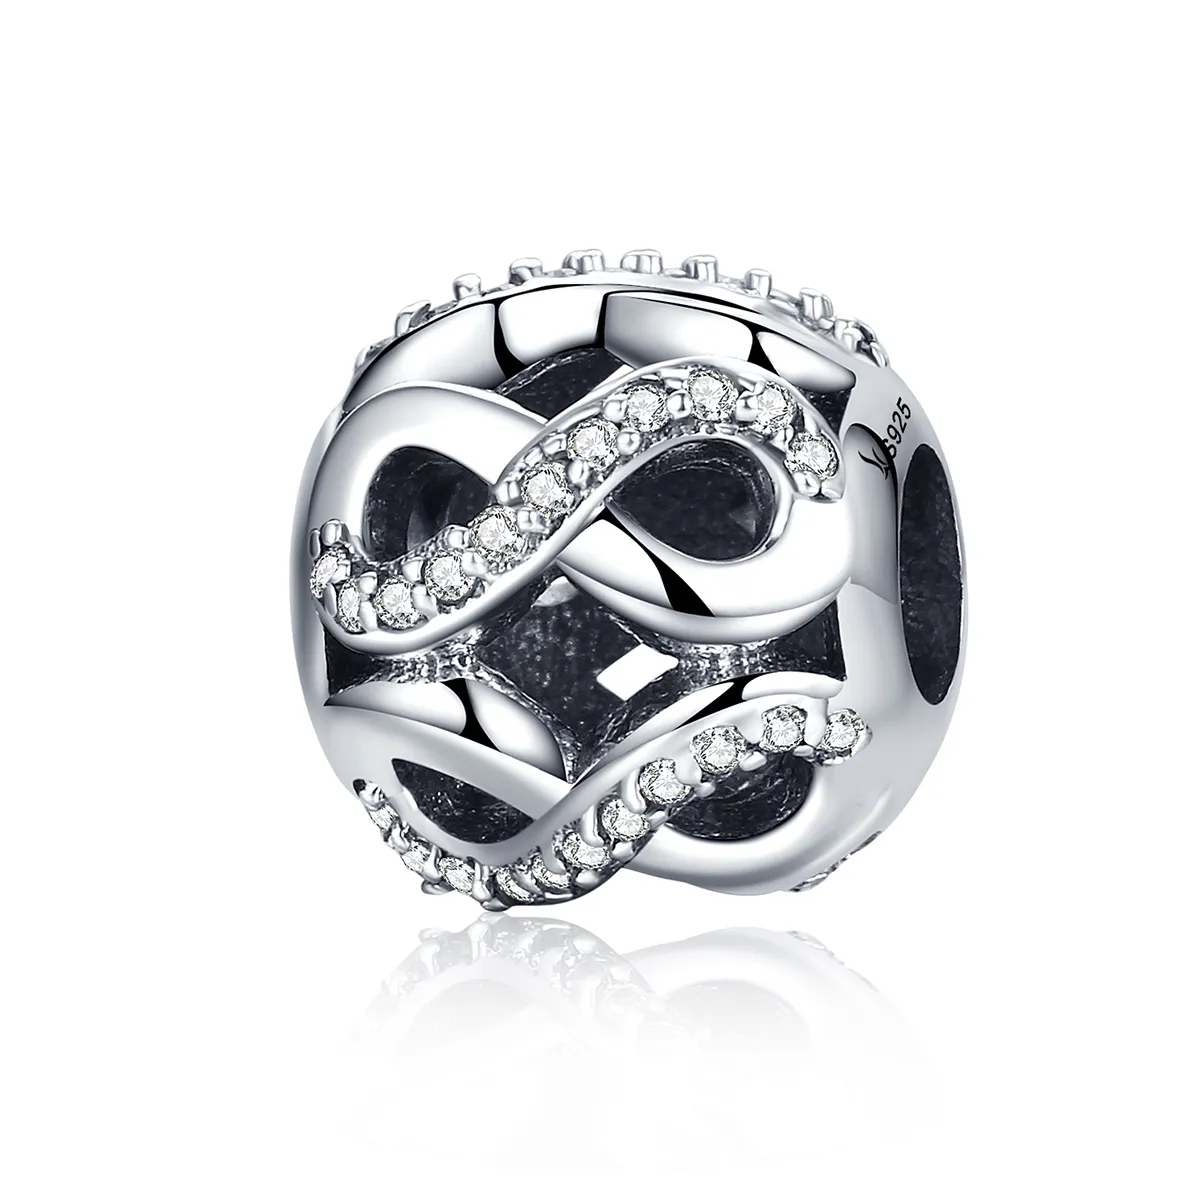 Pandora Style Silver Infinity Charm - SCC141